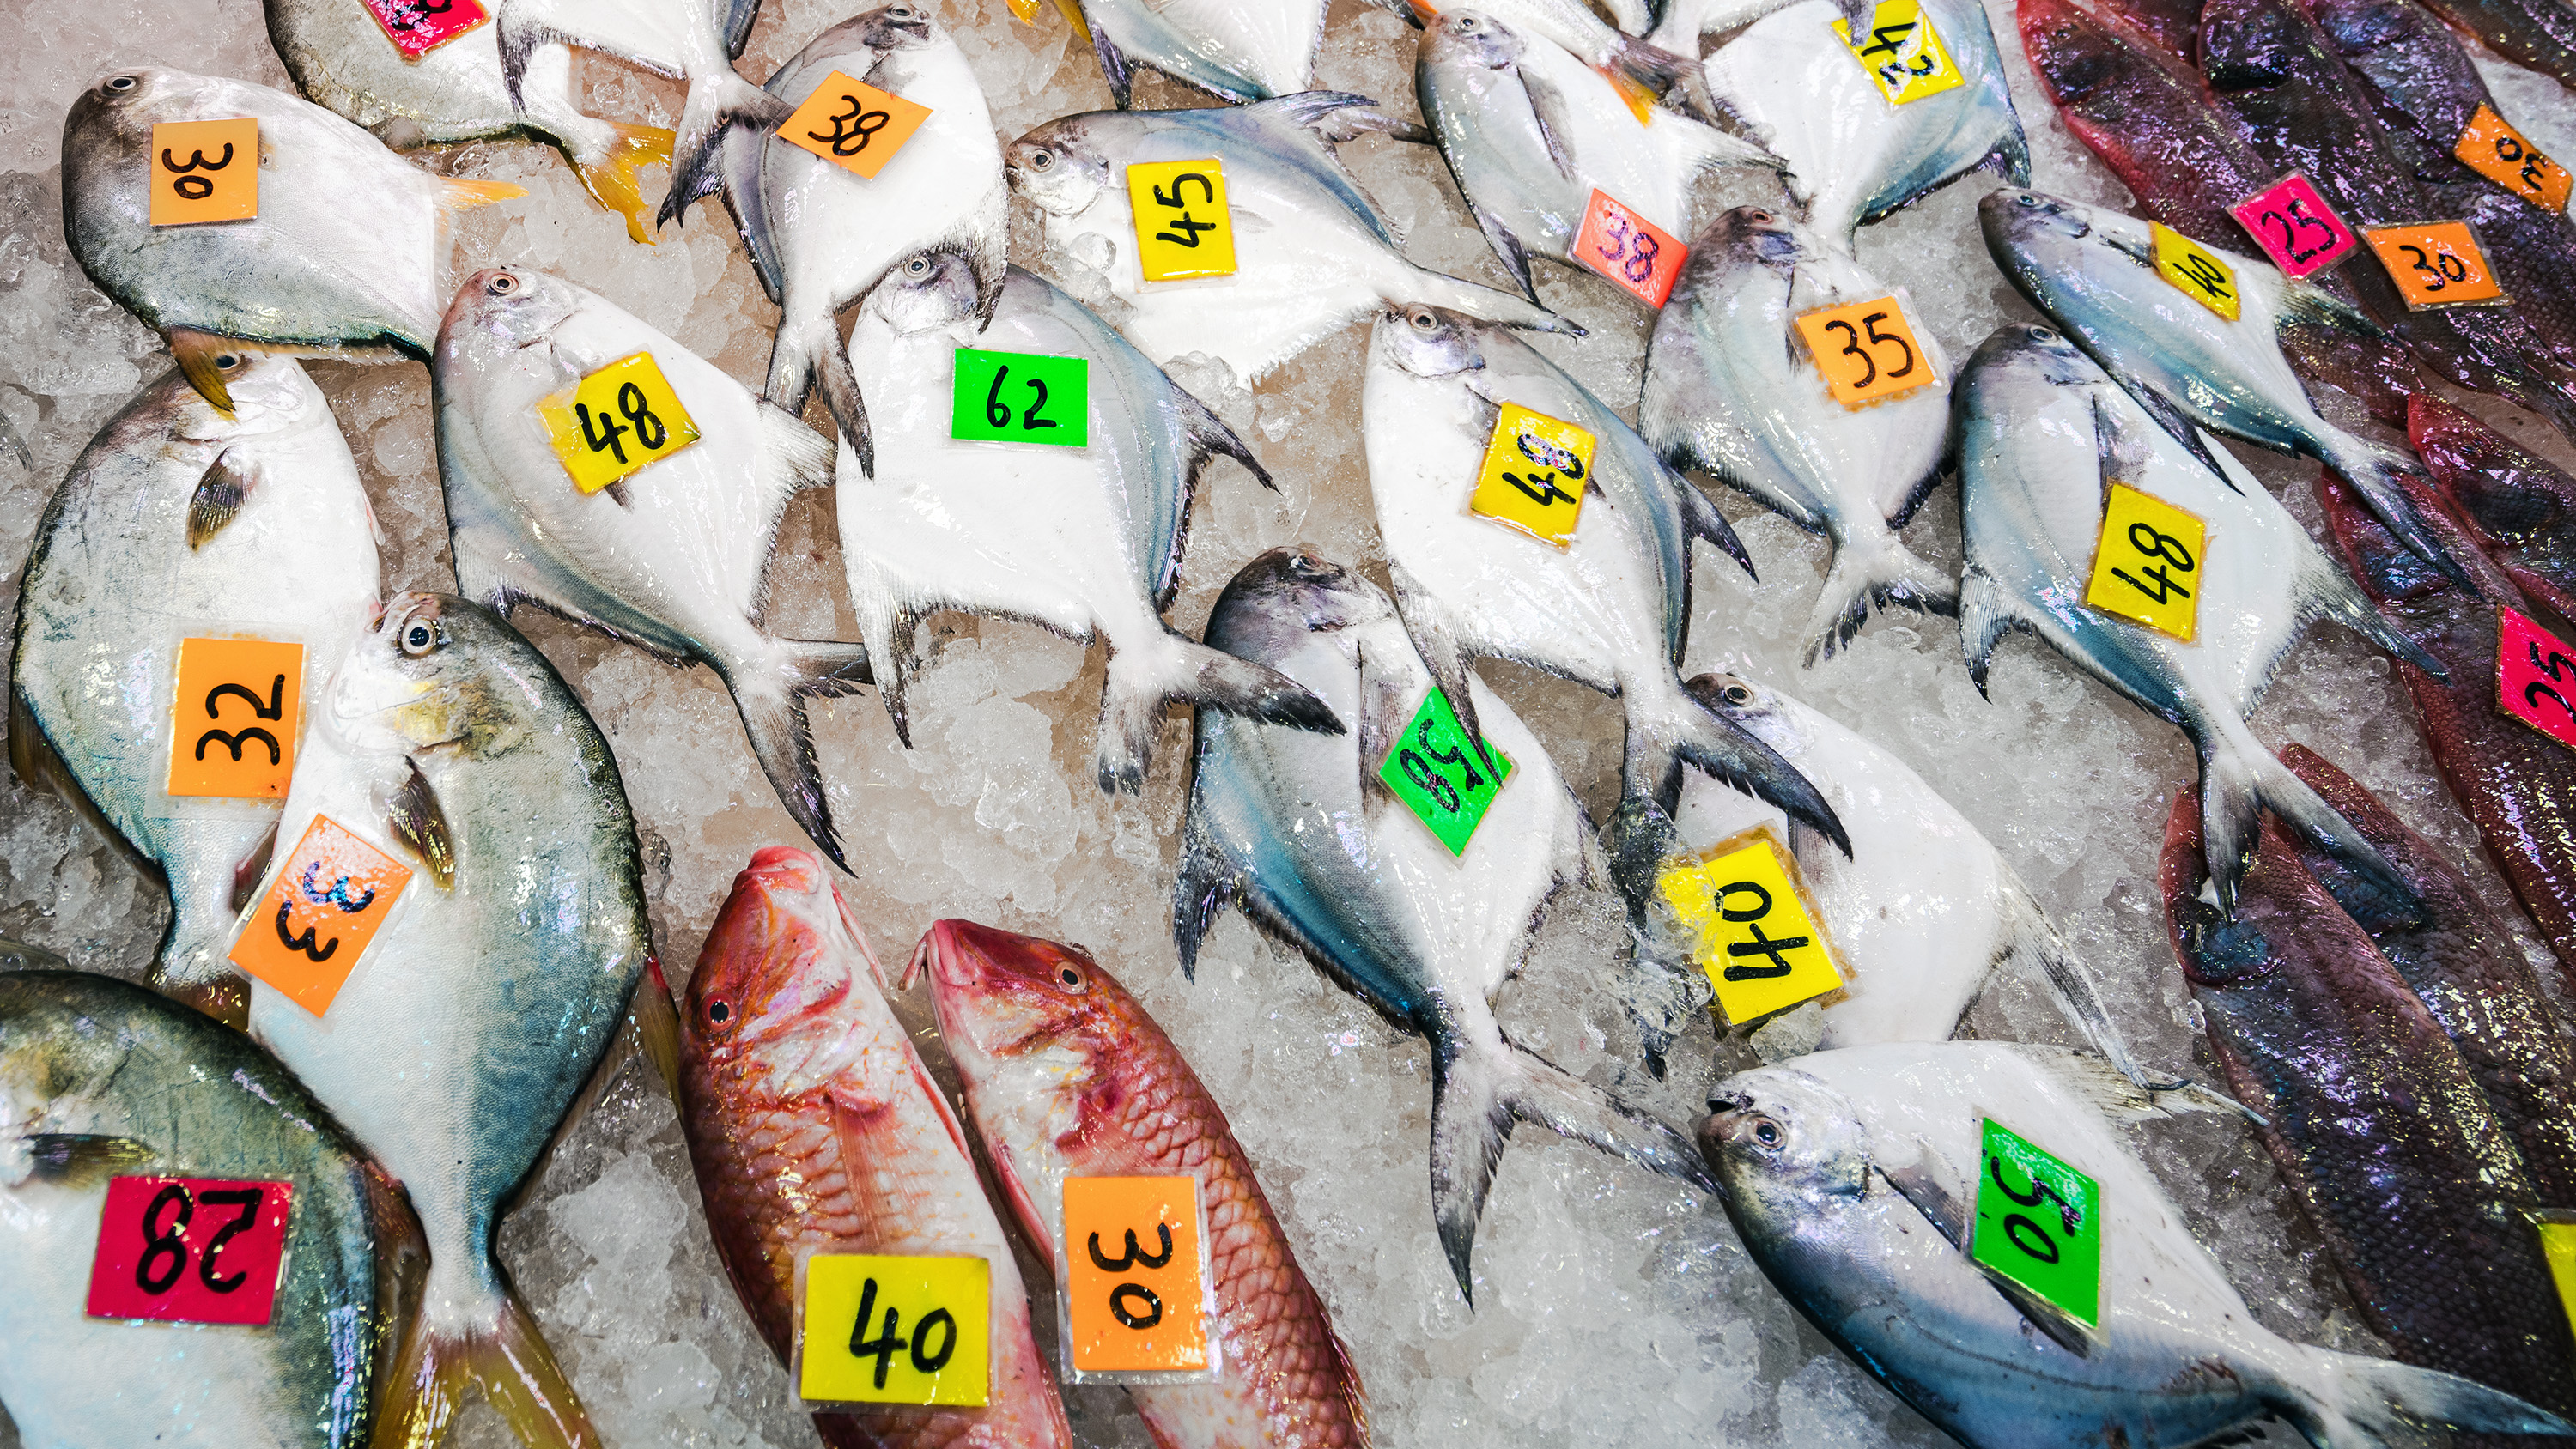 wet market selling fish